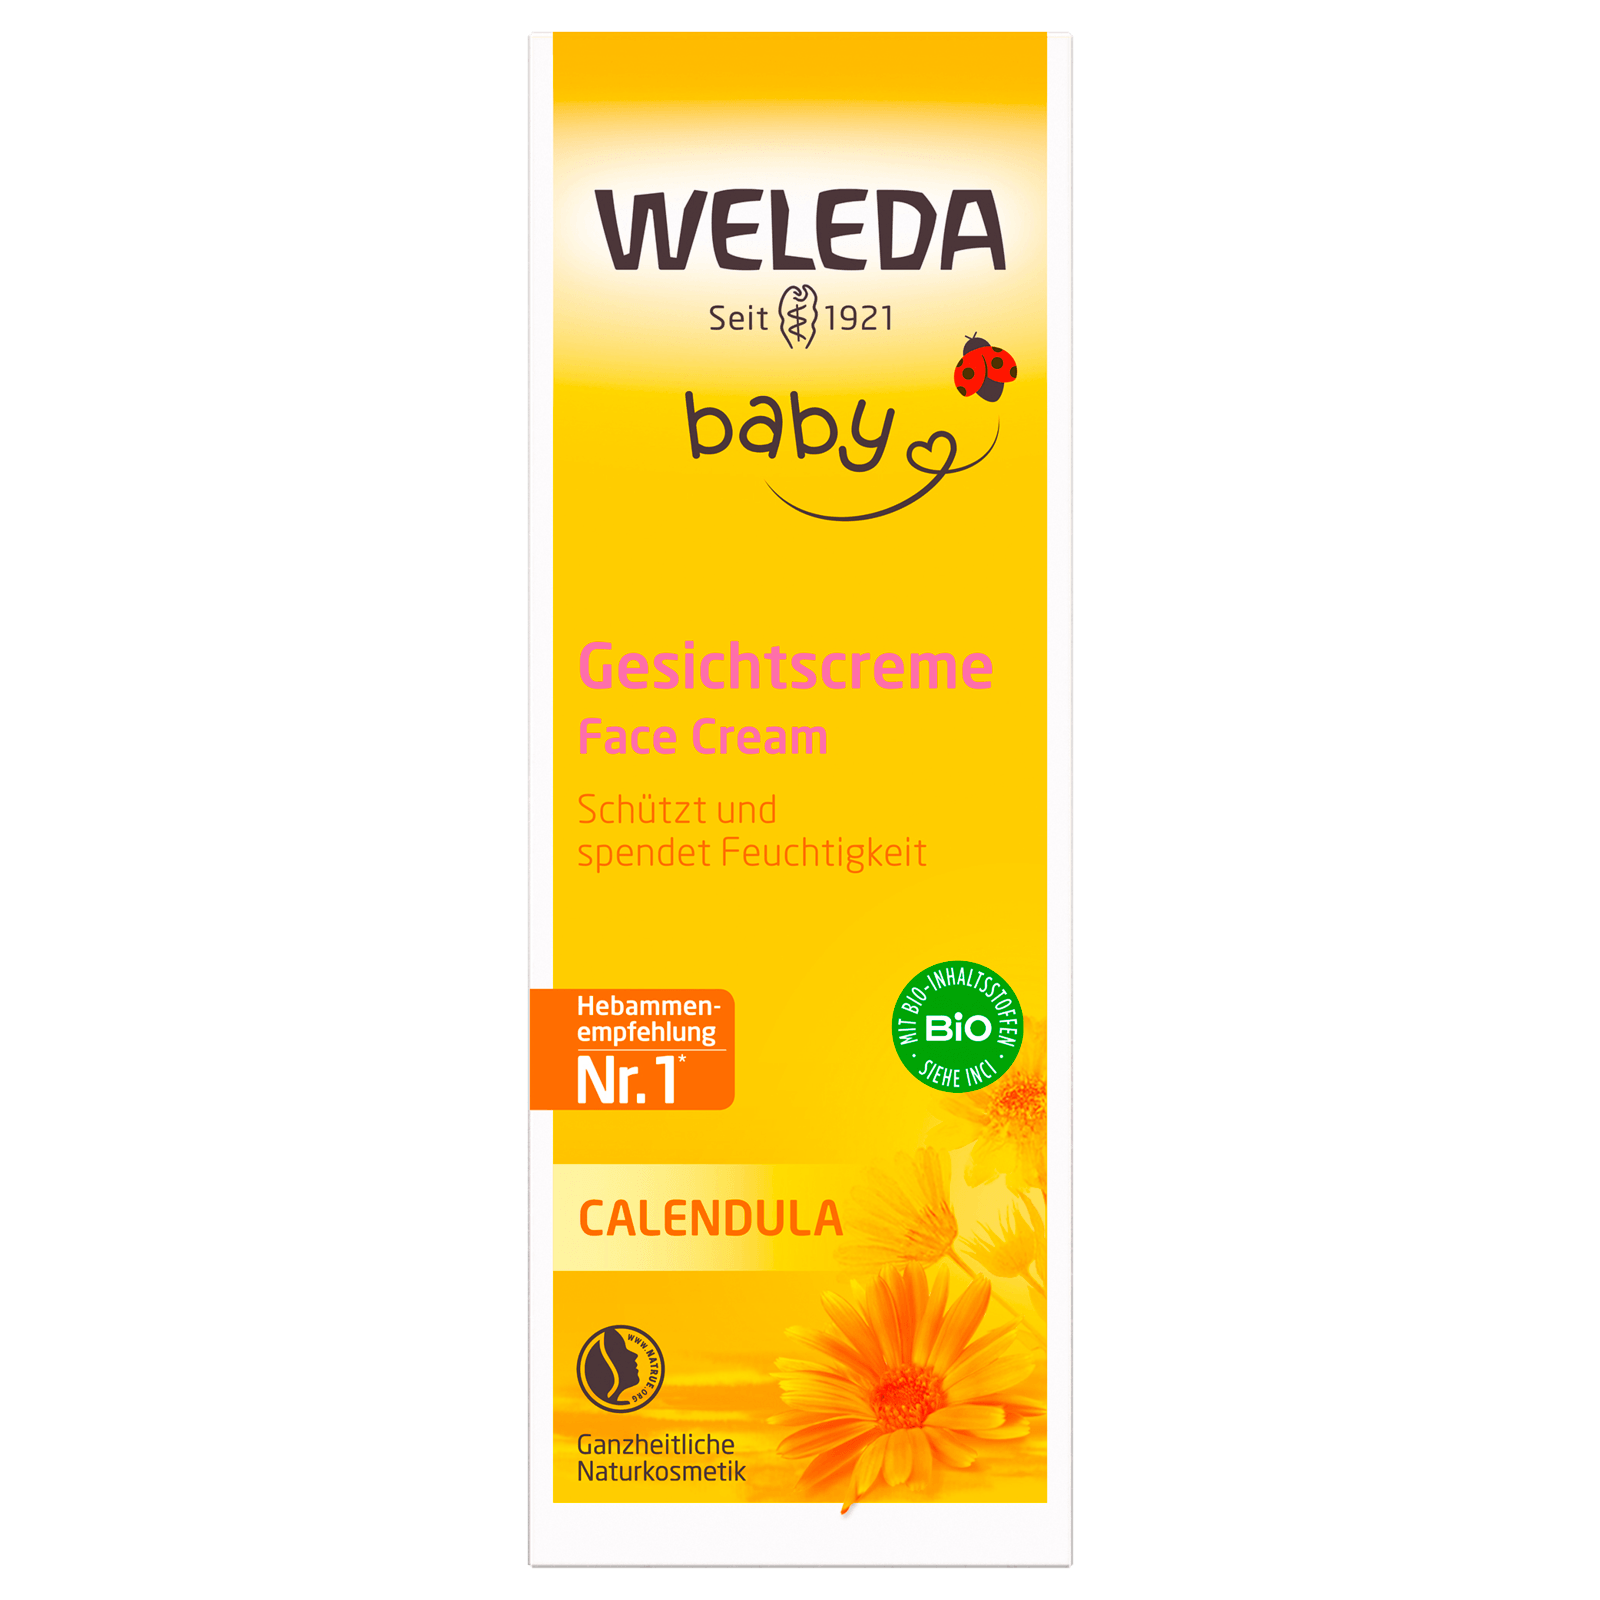 WELEDA Aceite de Caléndula para Bebé (1x 200 ml) + Champú Y Gel de Ducha de  Caléndula (1x 200 ml)